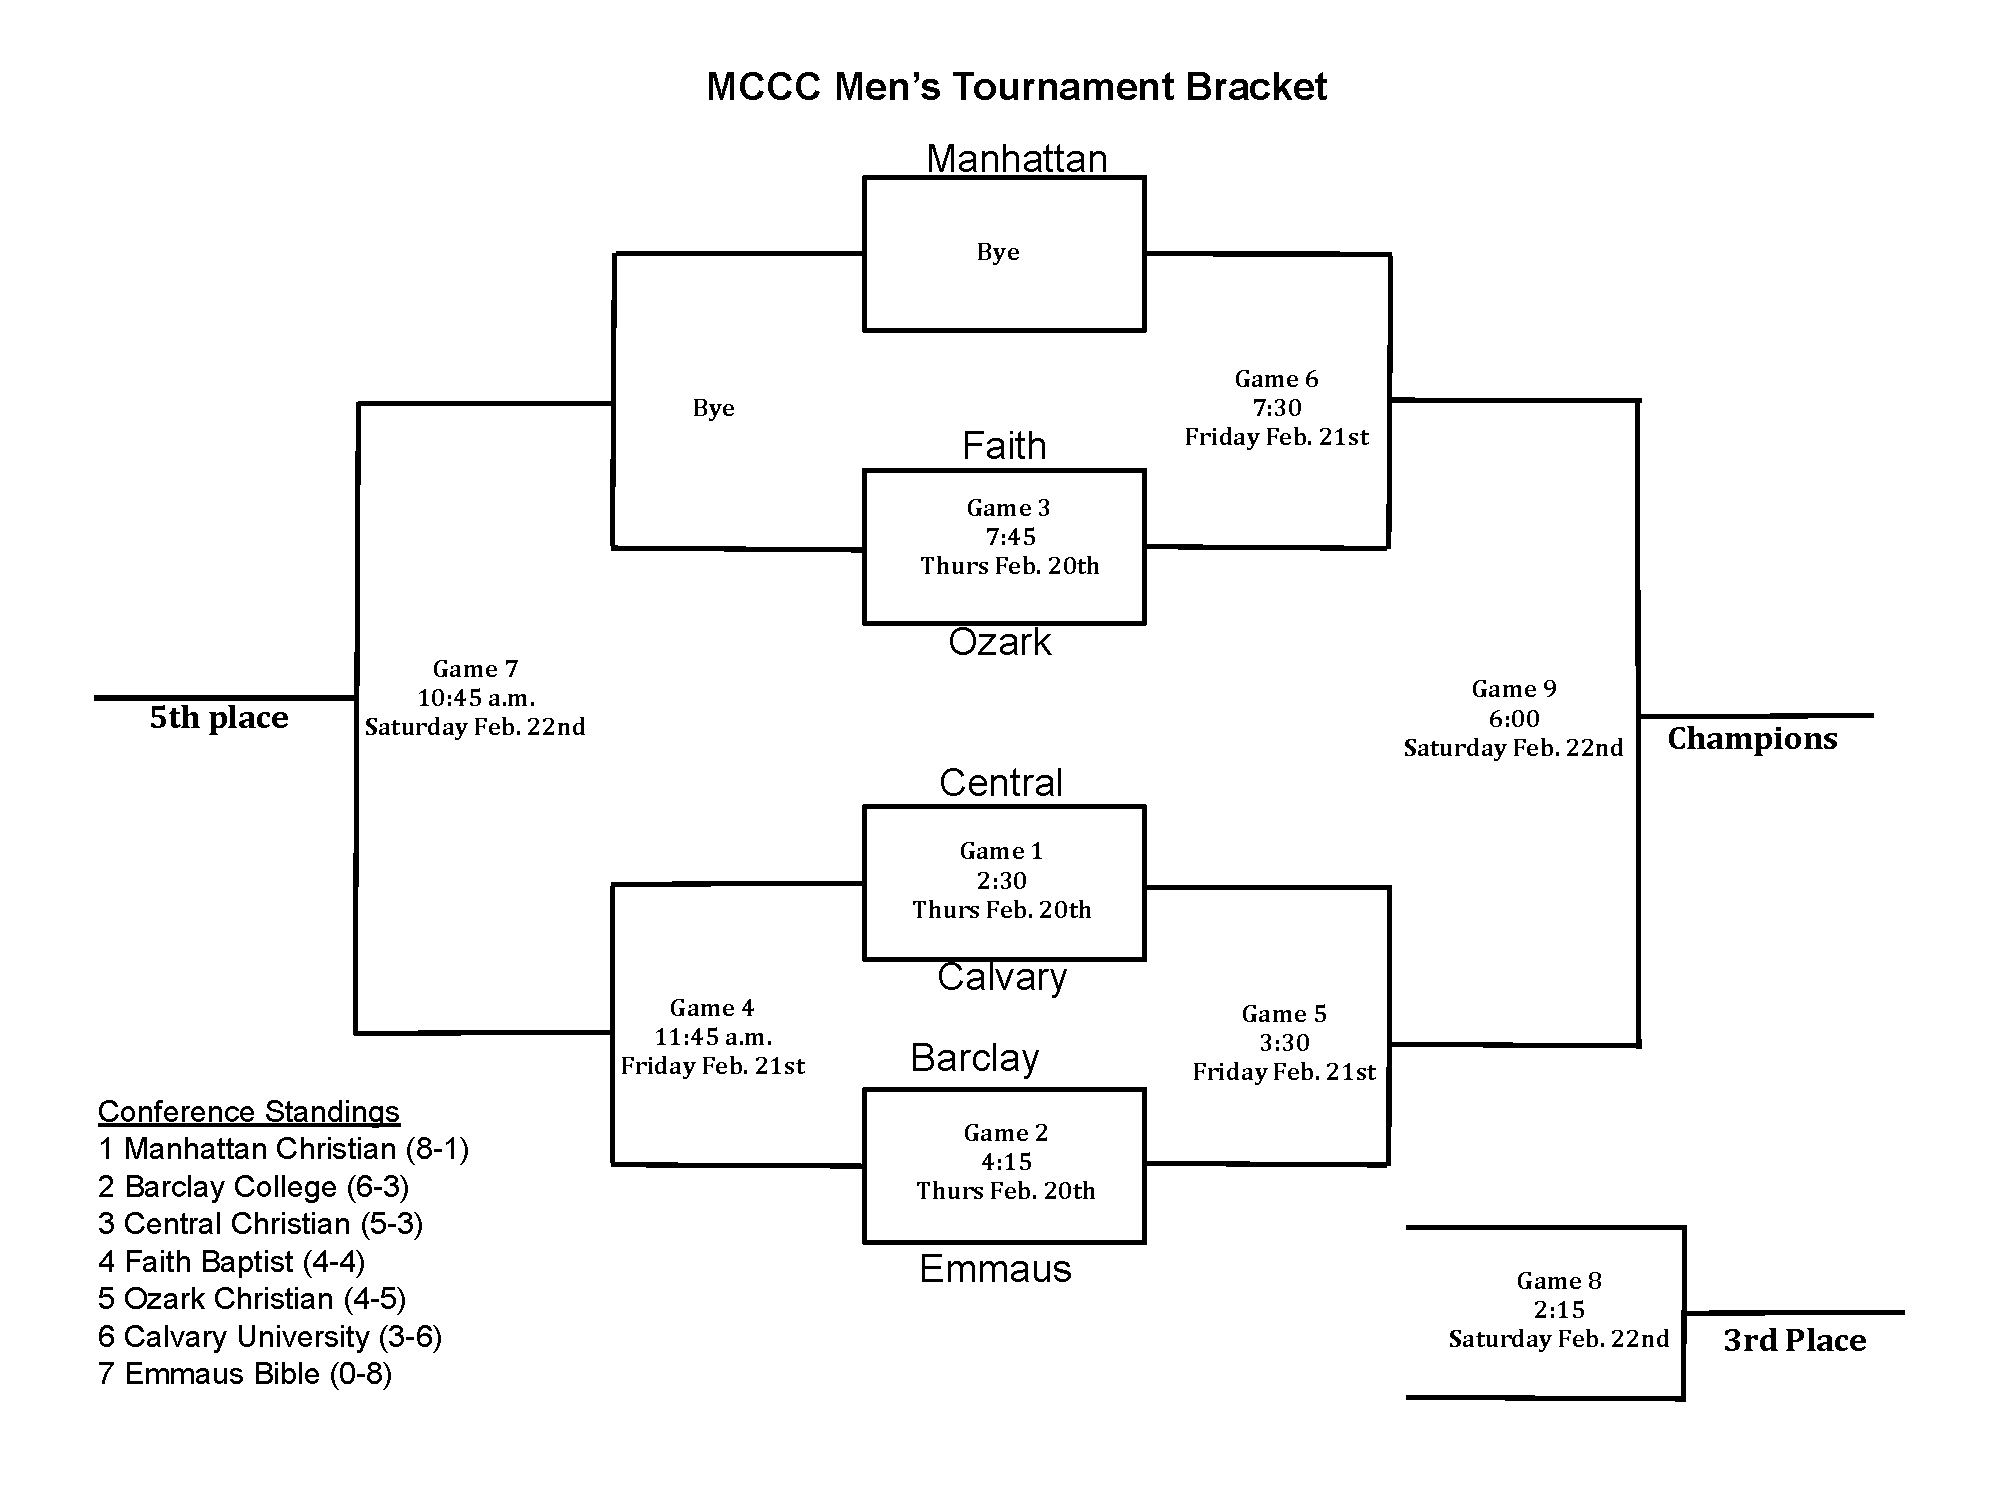 MCCC Tournament 2020 Men's Basketball Bracket